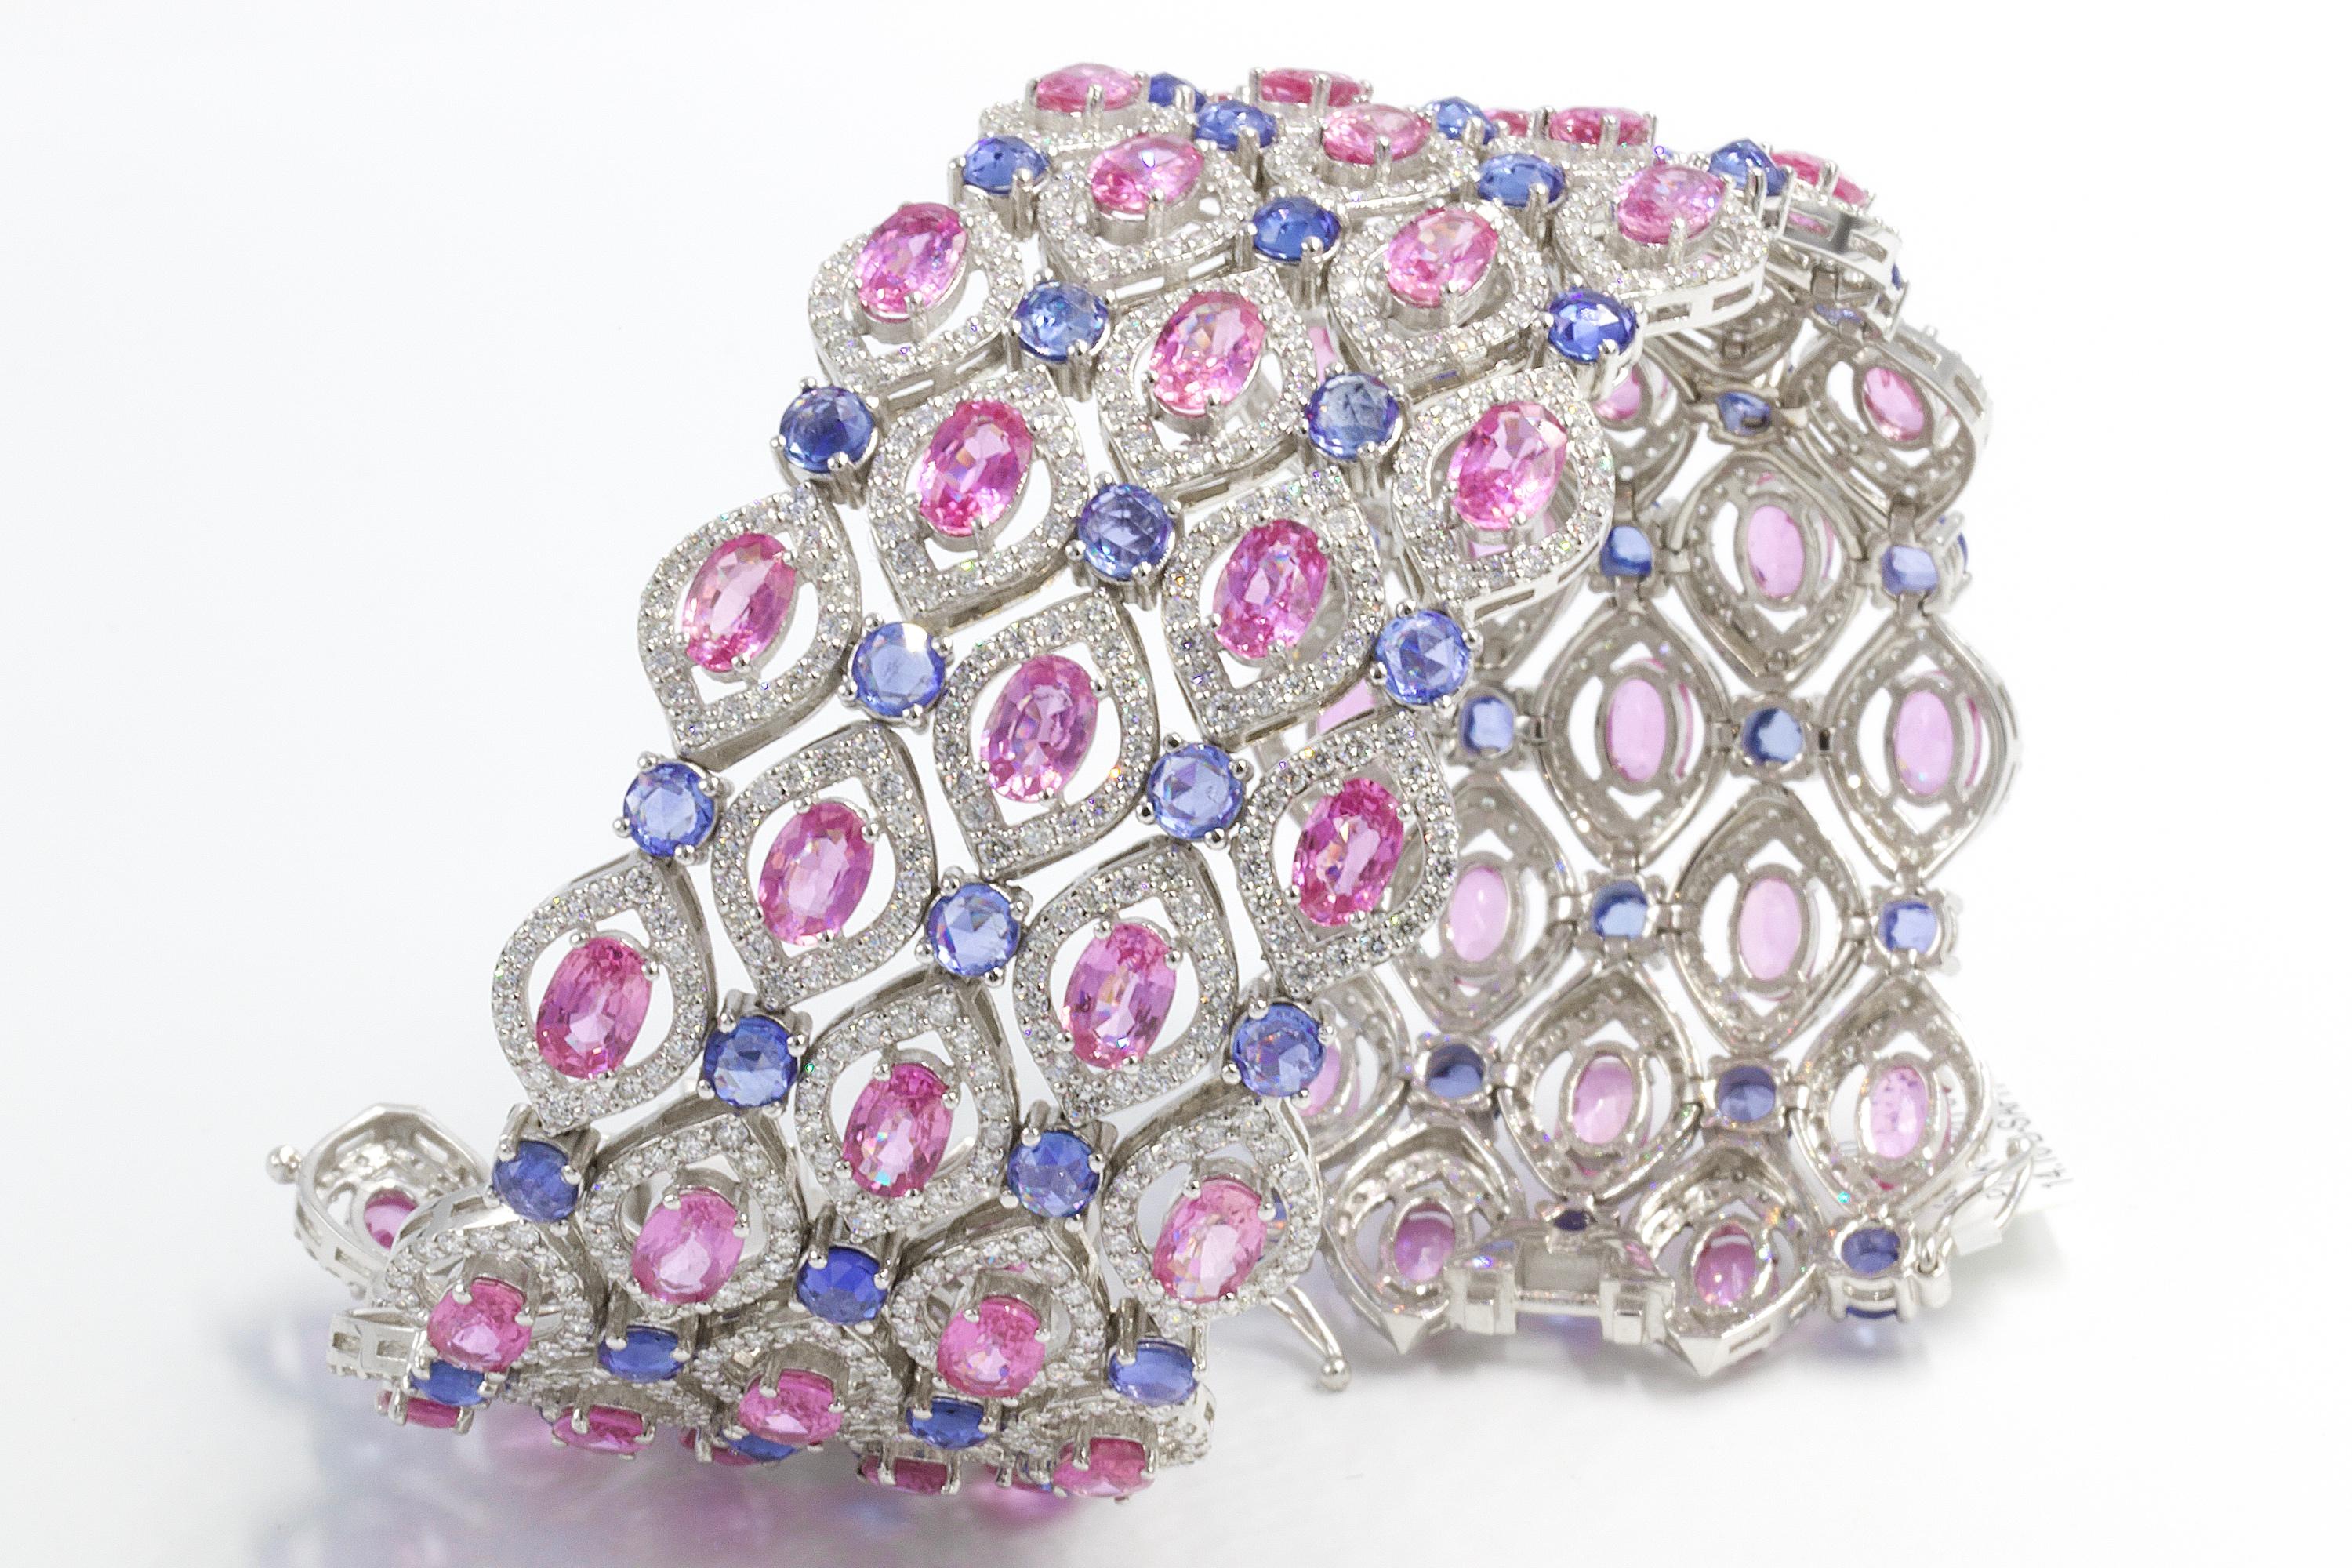 Oval Cut Pink and Blue Sapphires 48 Carat With Diamonds 9.36 Carat Bracelet